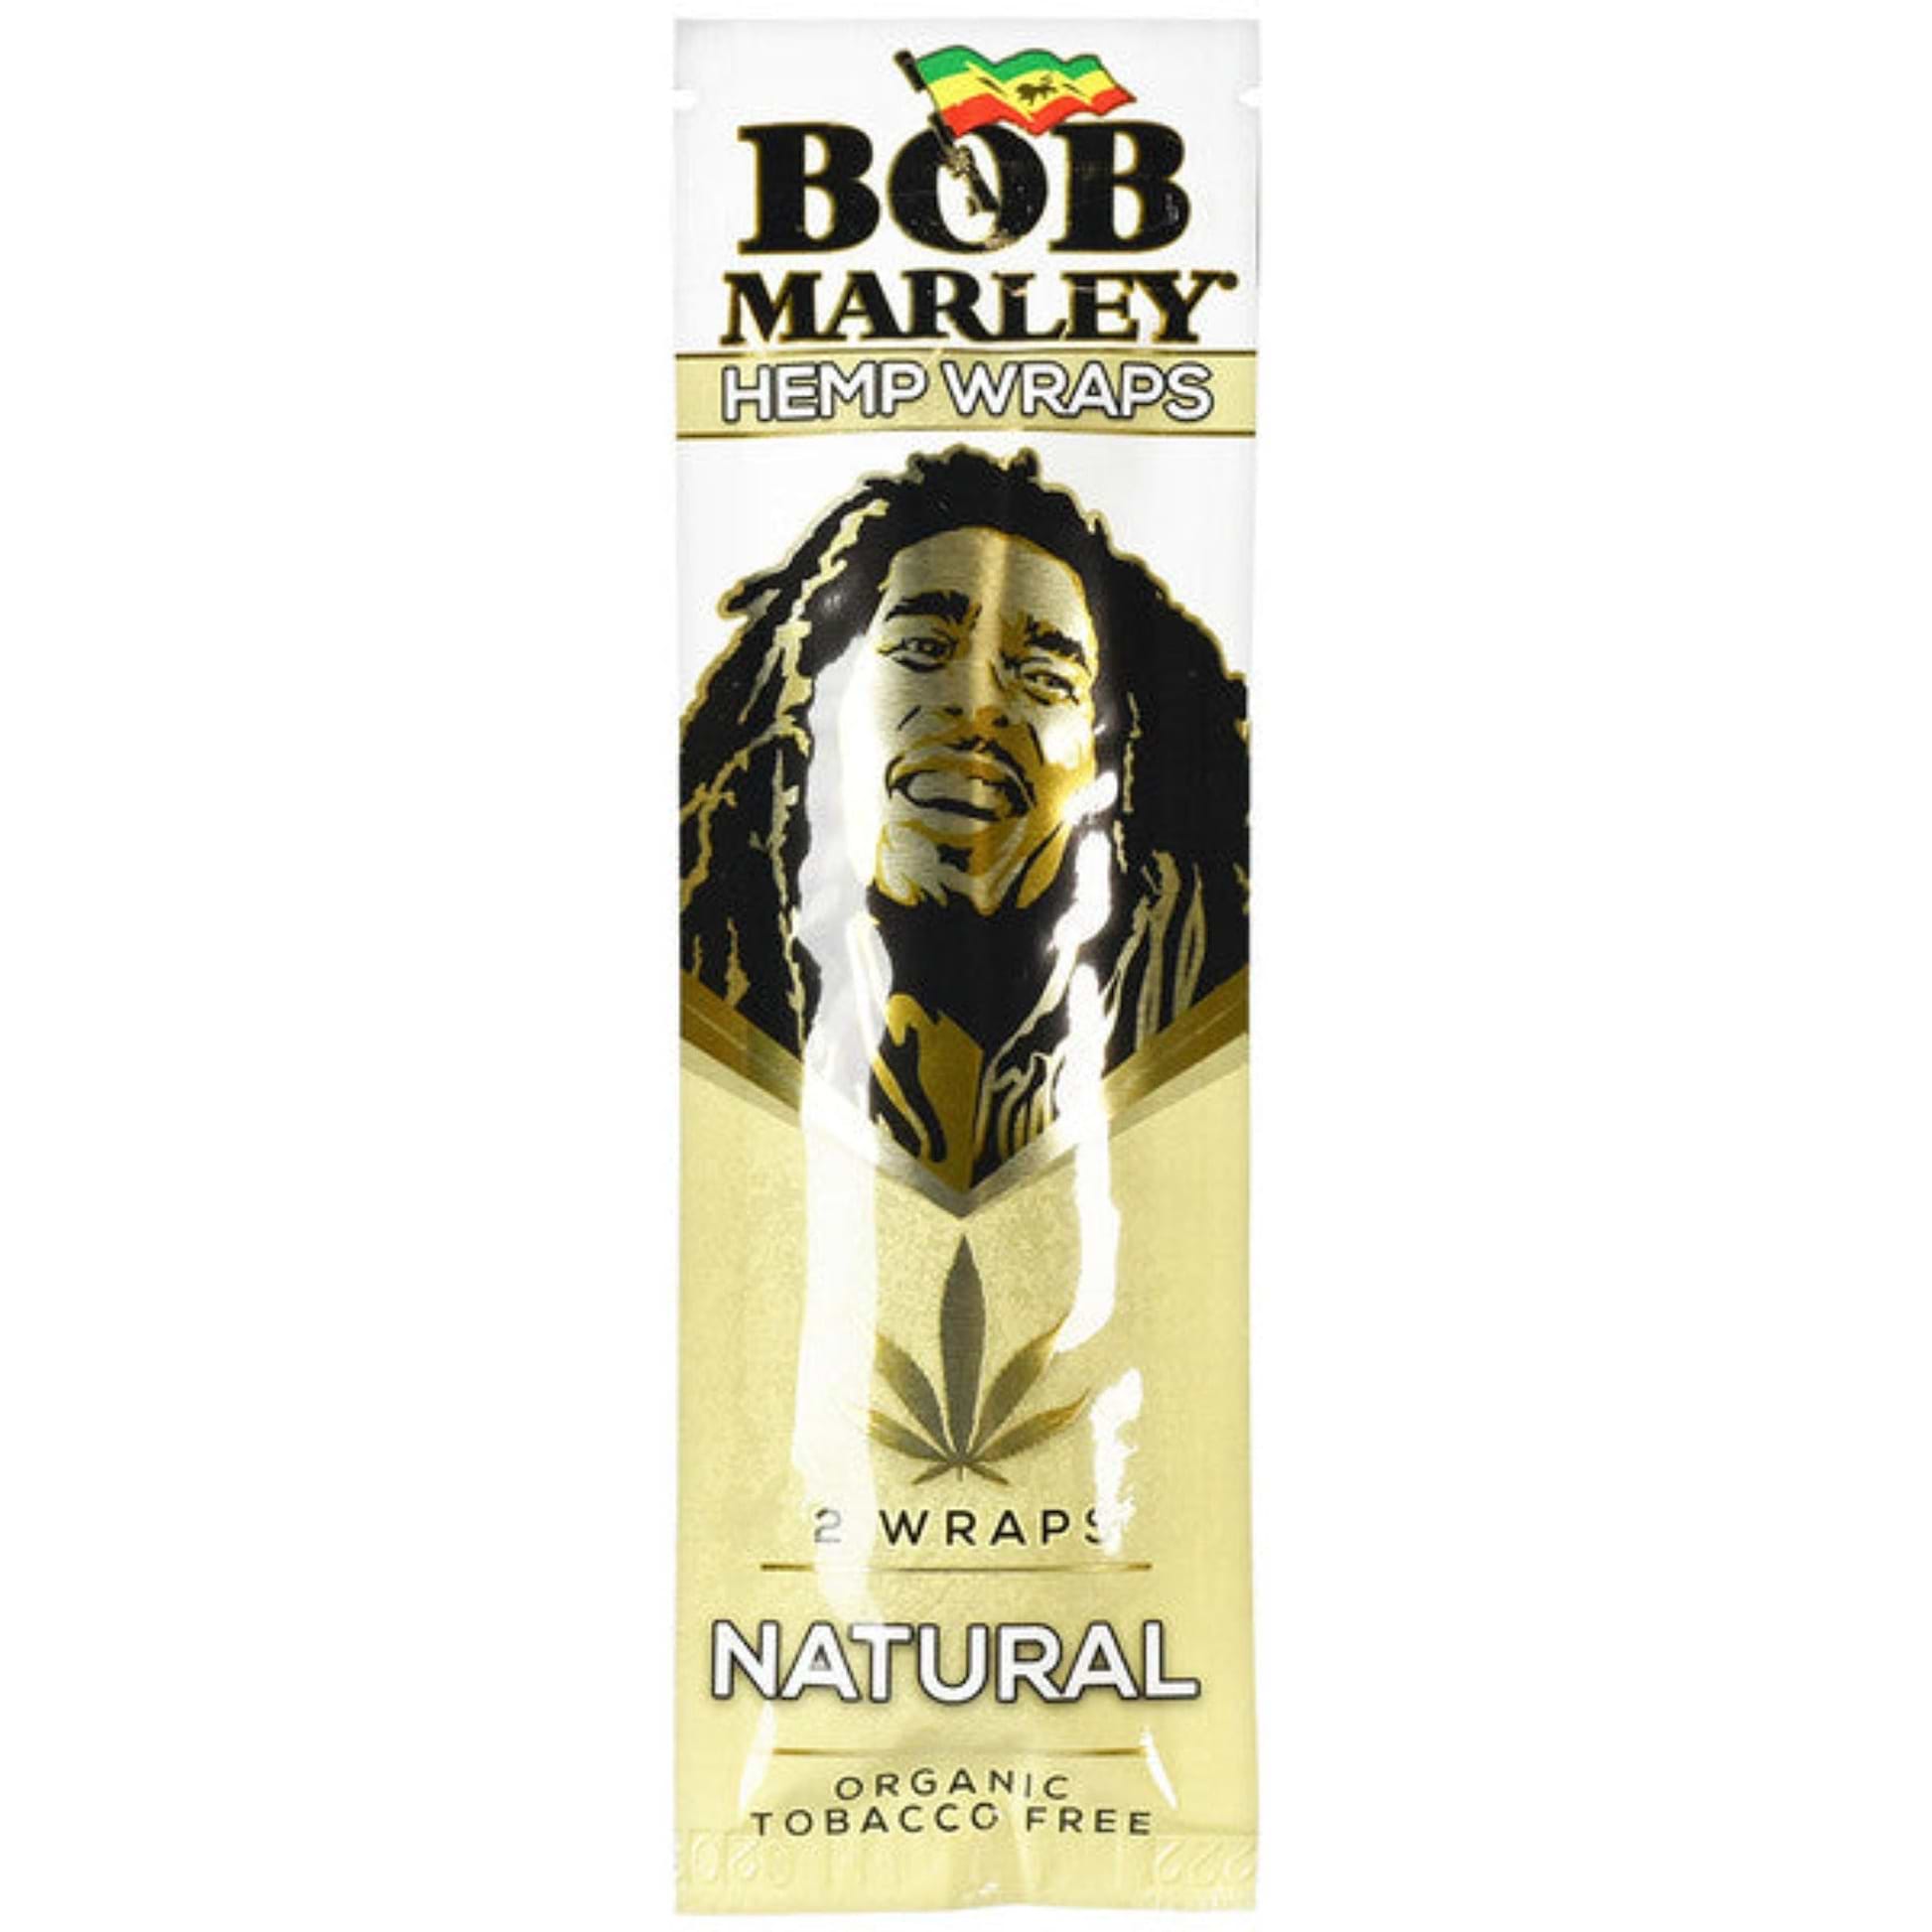 Bob Marley Hemp Wraps Natural